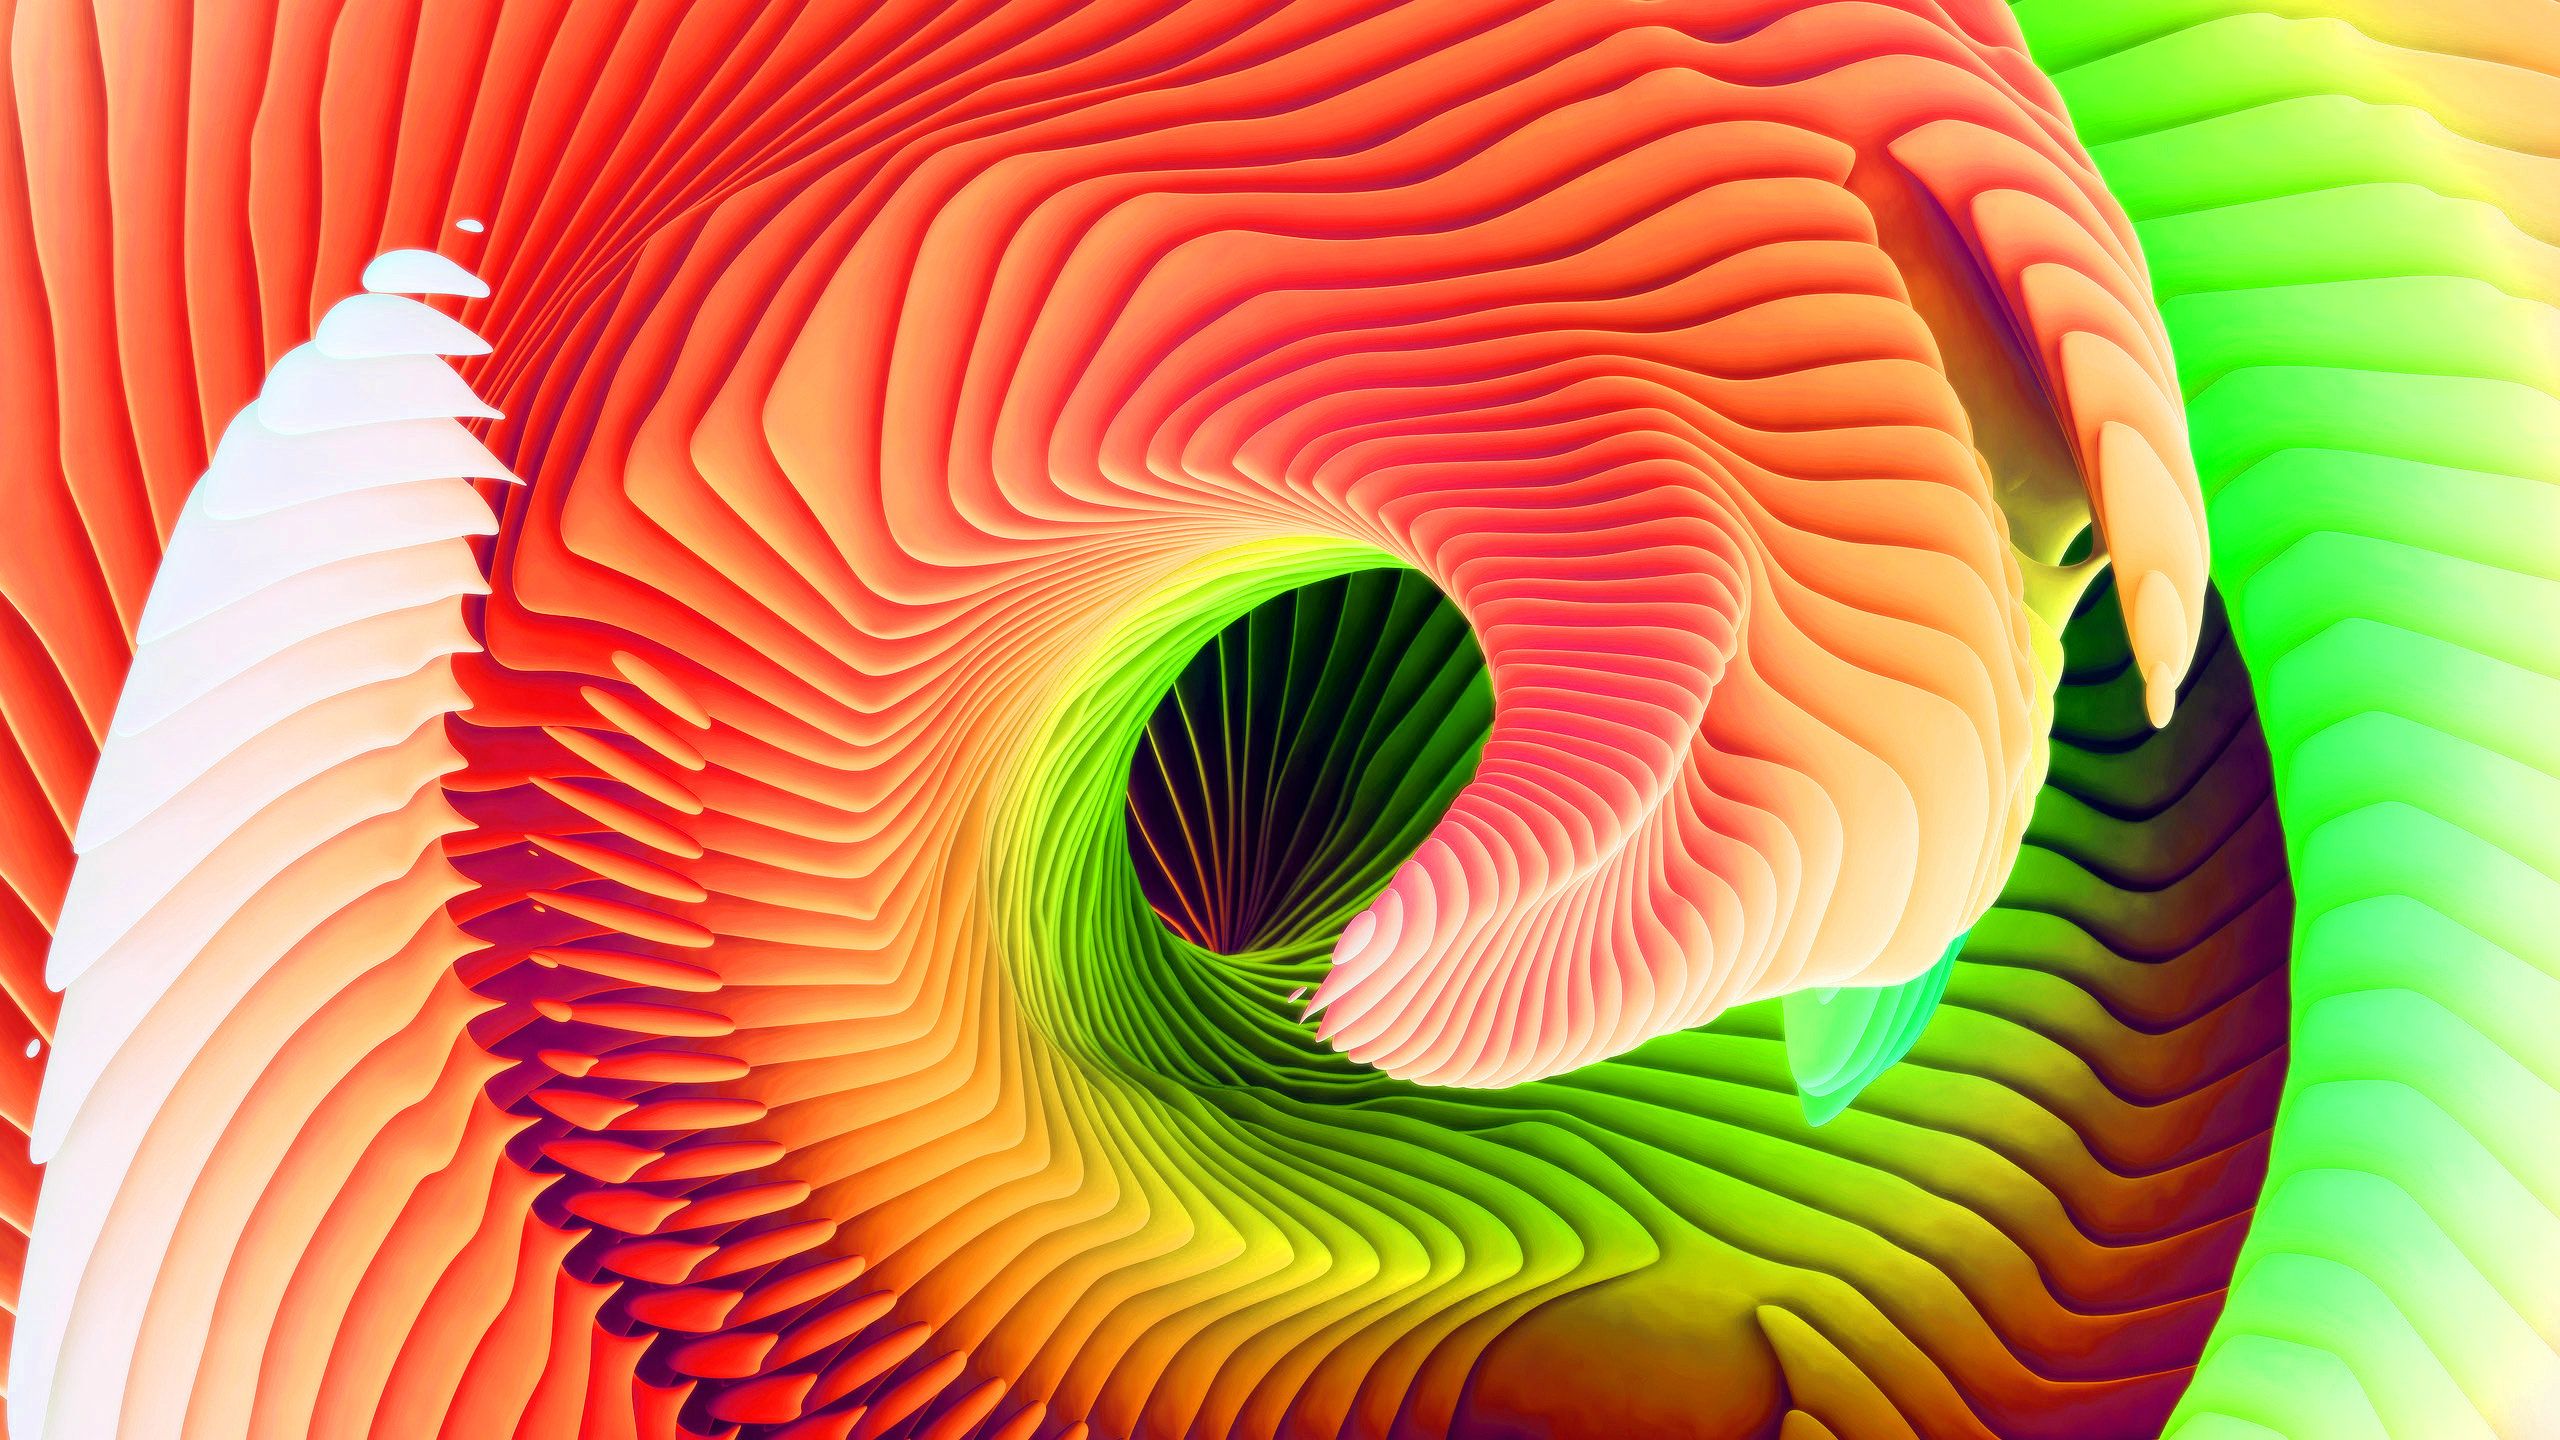 Abstract spiral waves wallpaper